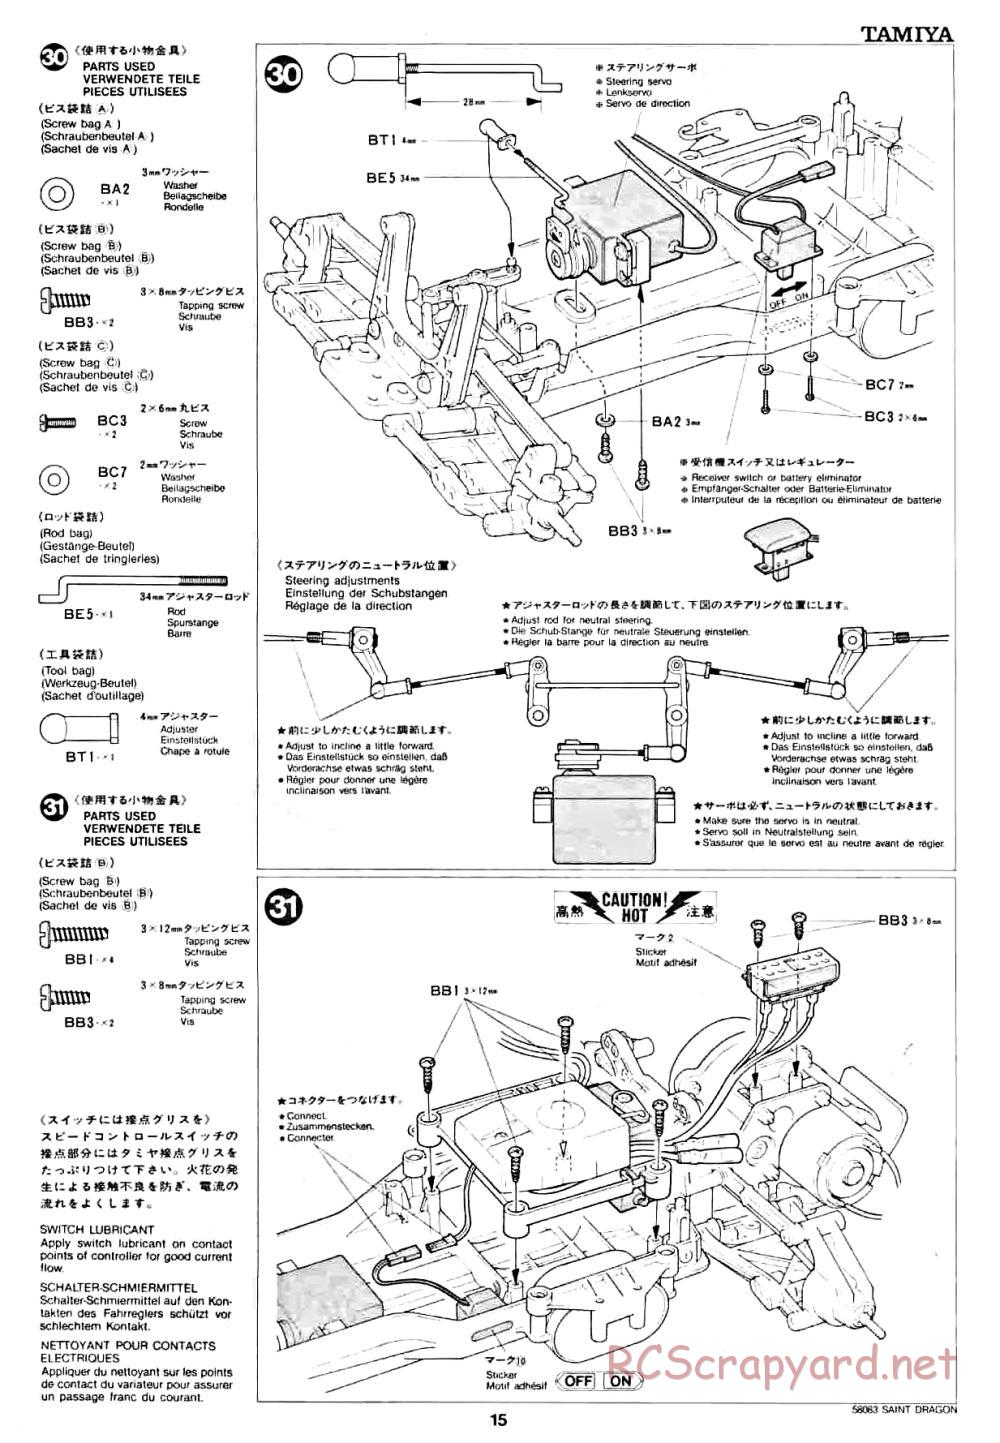 Tamiya - Saint Dragon - 58083 - Manual - Page 15